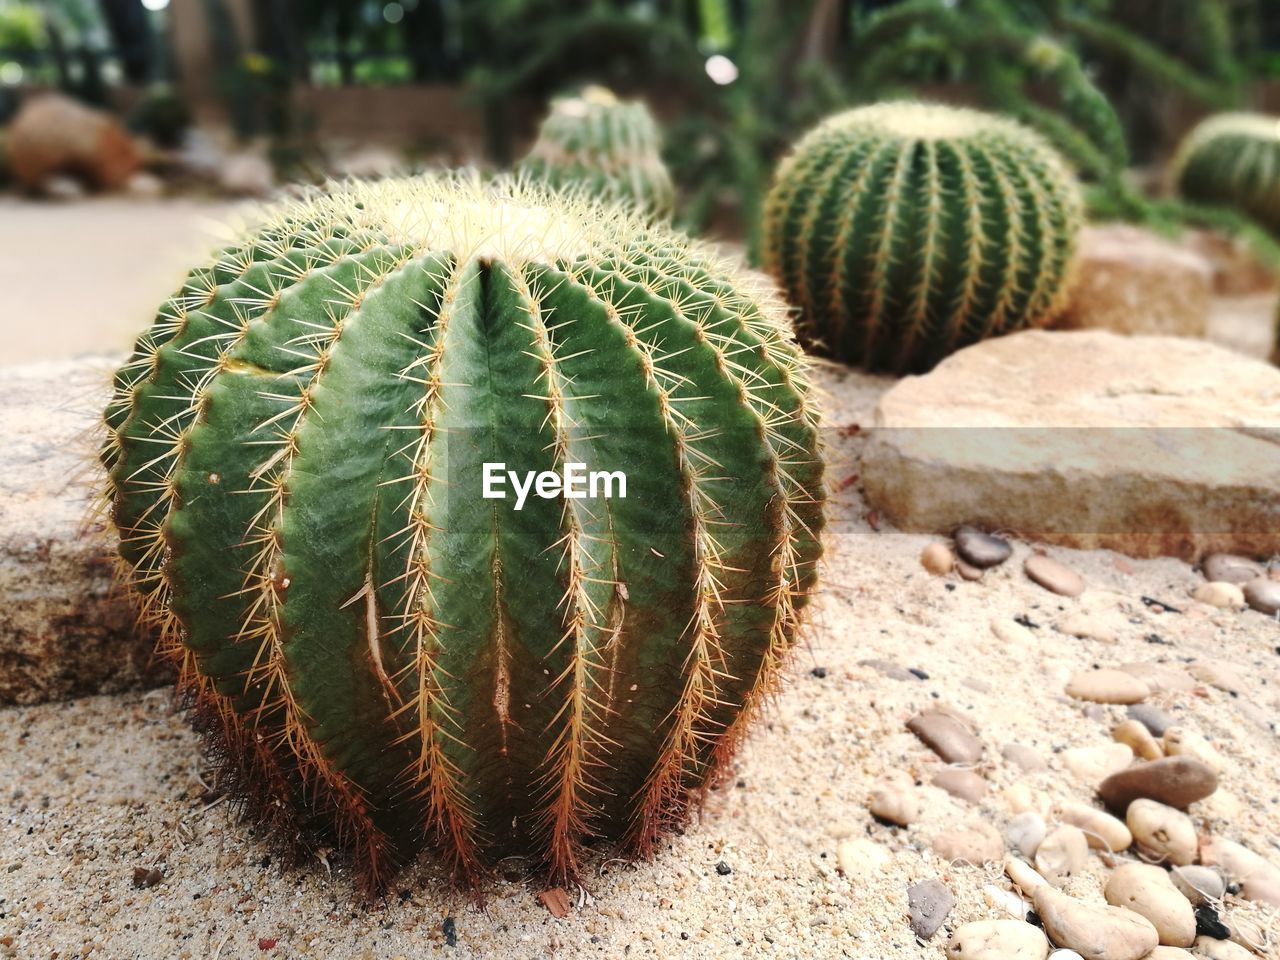 Cactus. tropical dome 